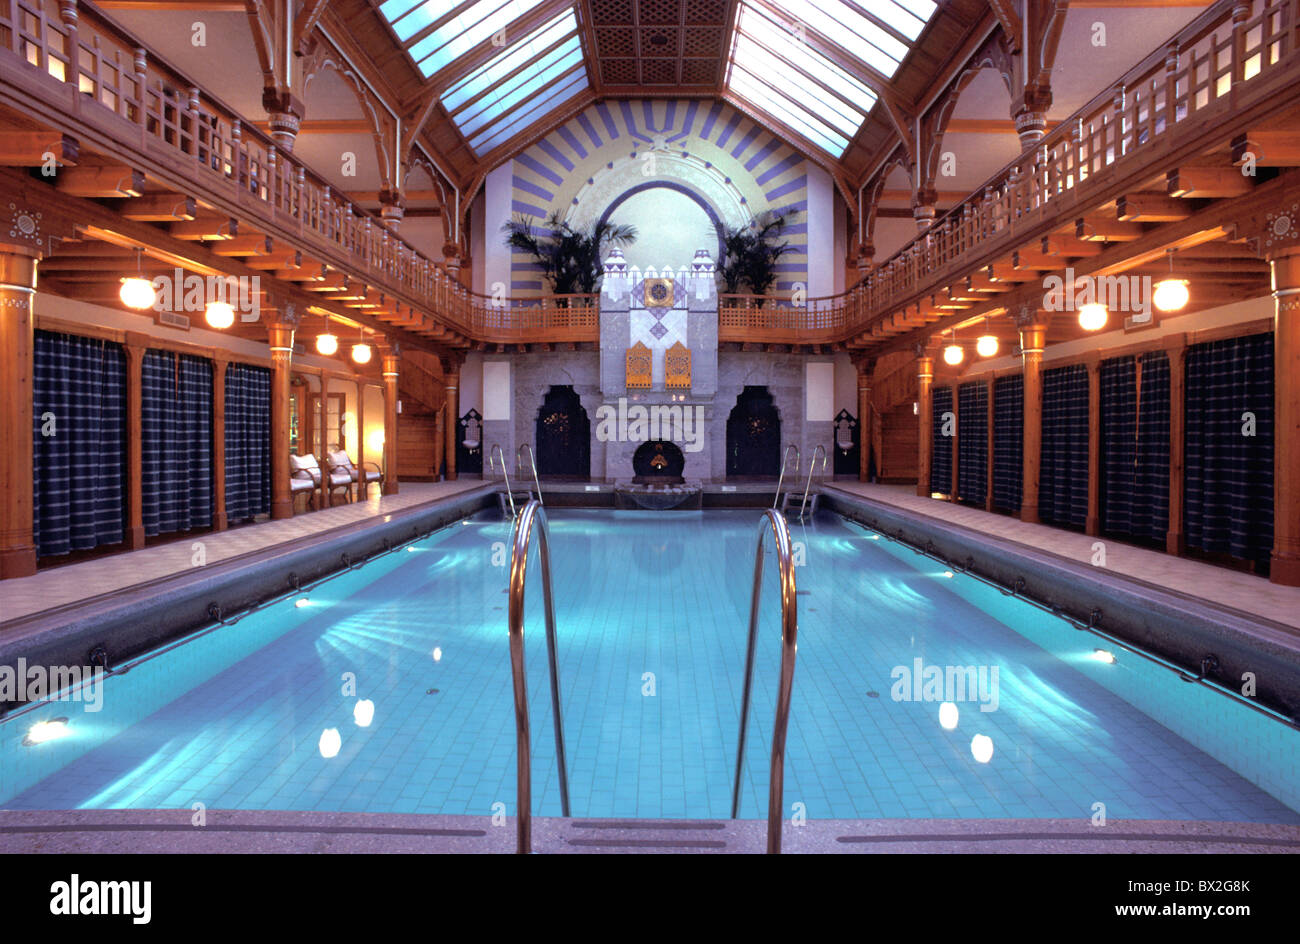 Bath Club Clubs Inside Pool Stockholm Sturebadet Sweden Europe Swimming pool Swimmingpool Water Stock Photo